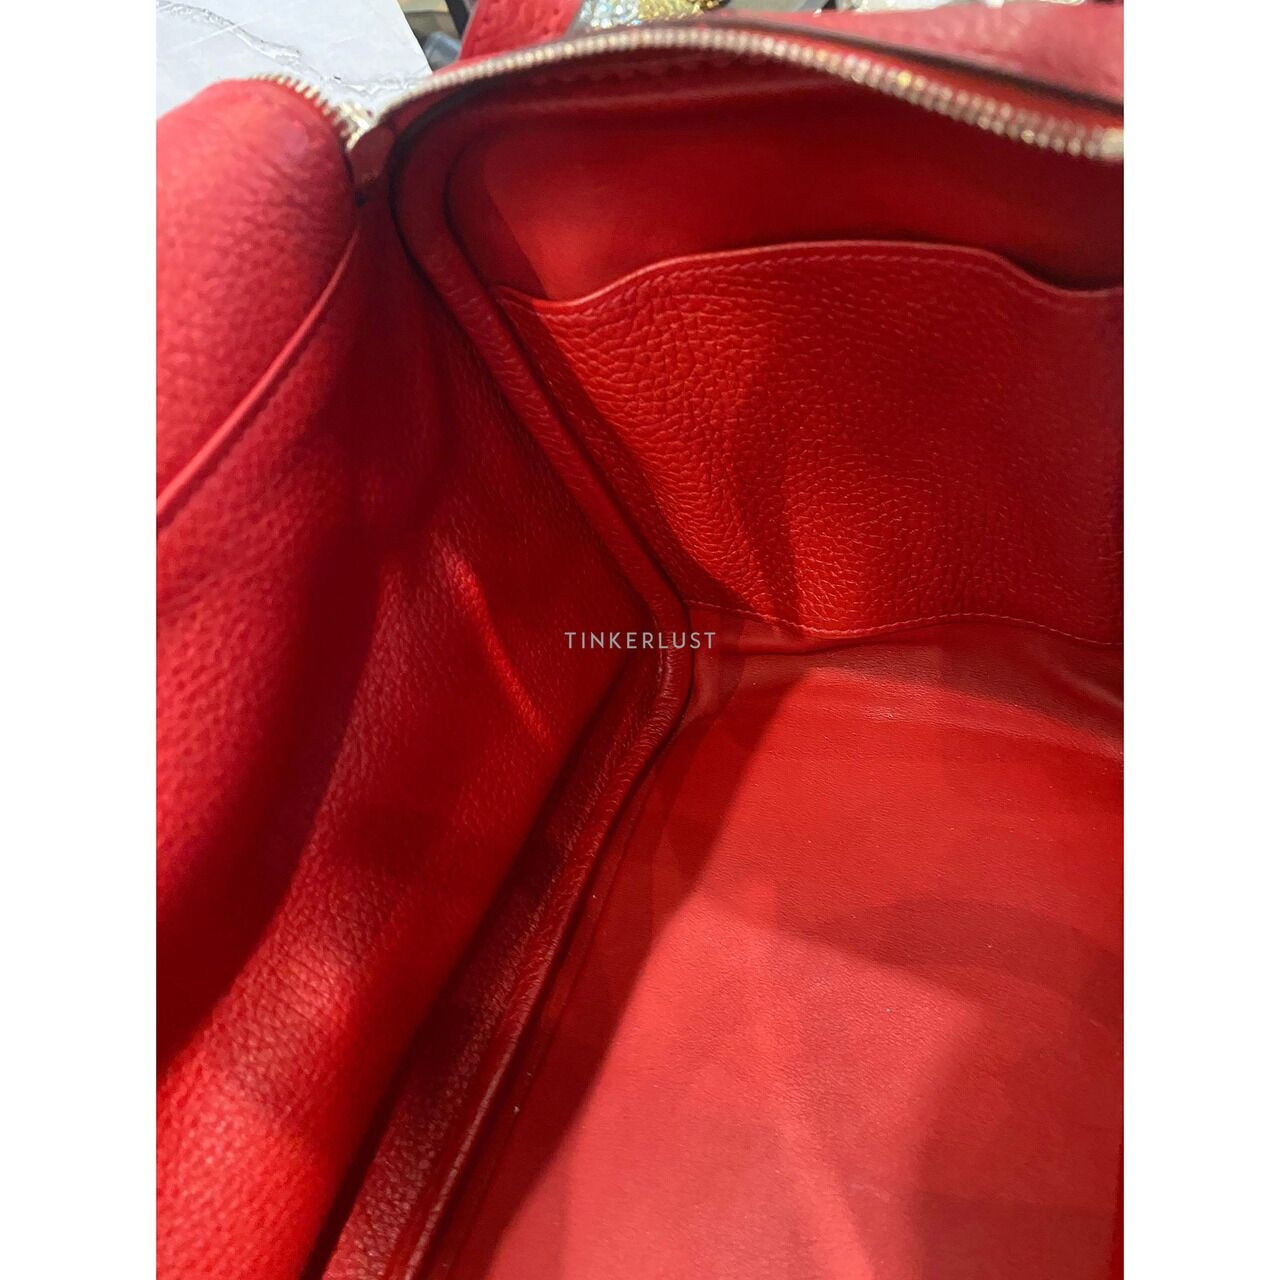 Hermes Lindy 26 Red Clemence PHW #A Shoulder Bag